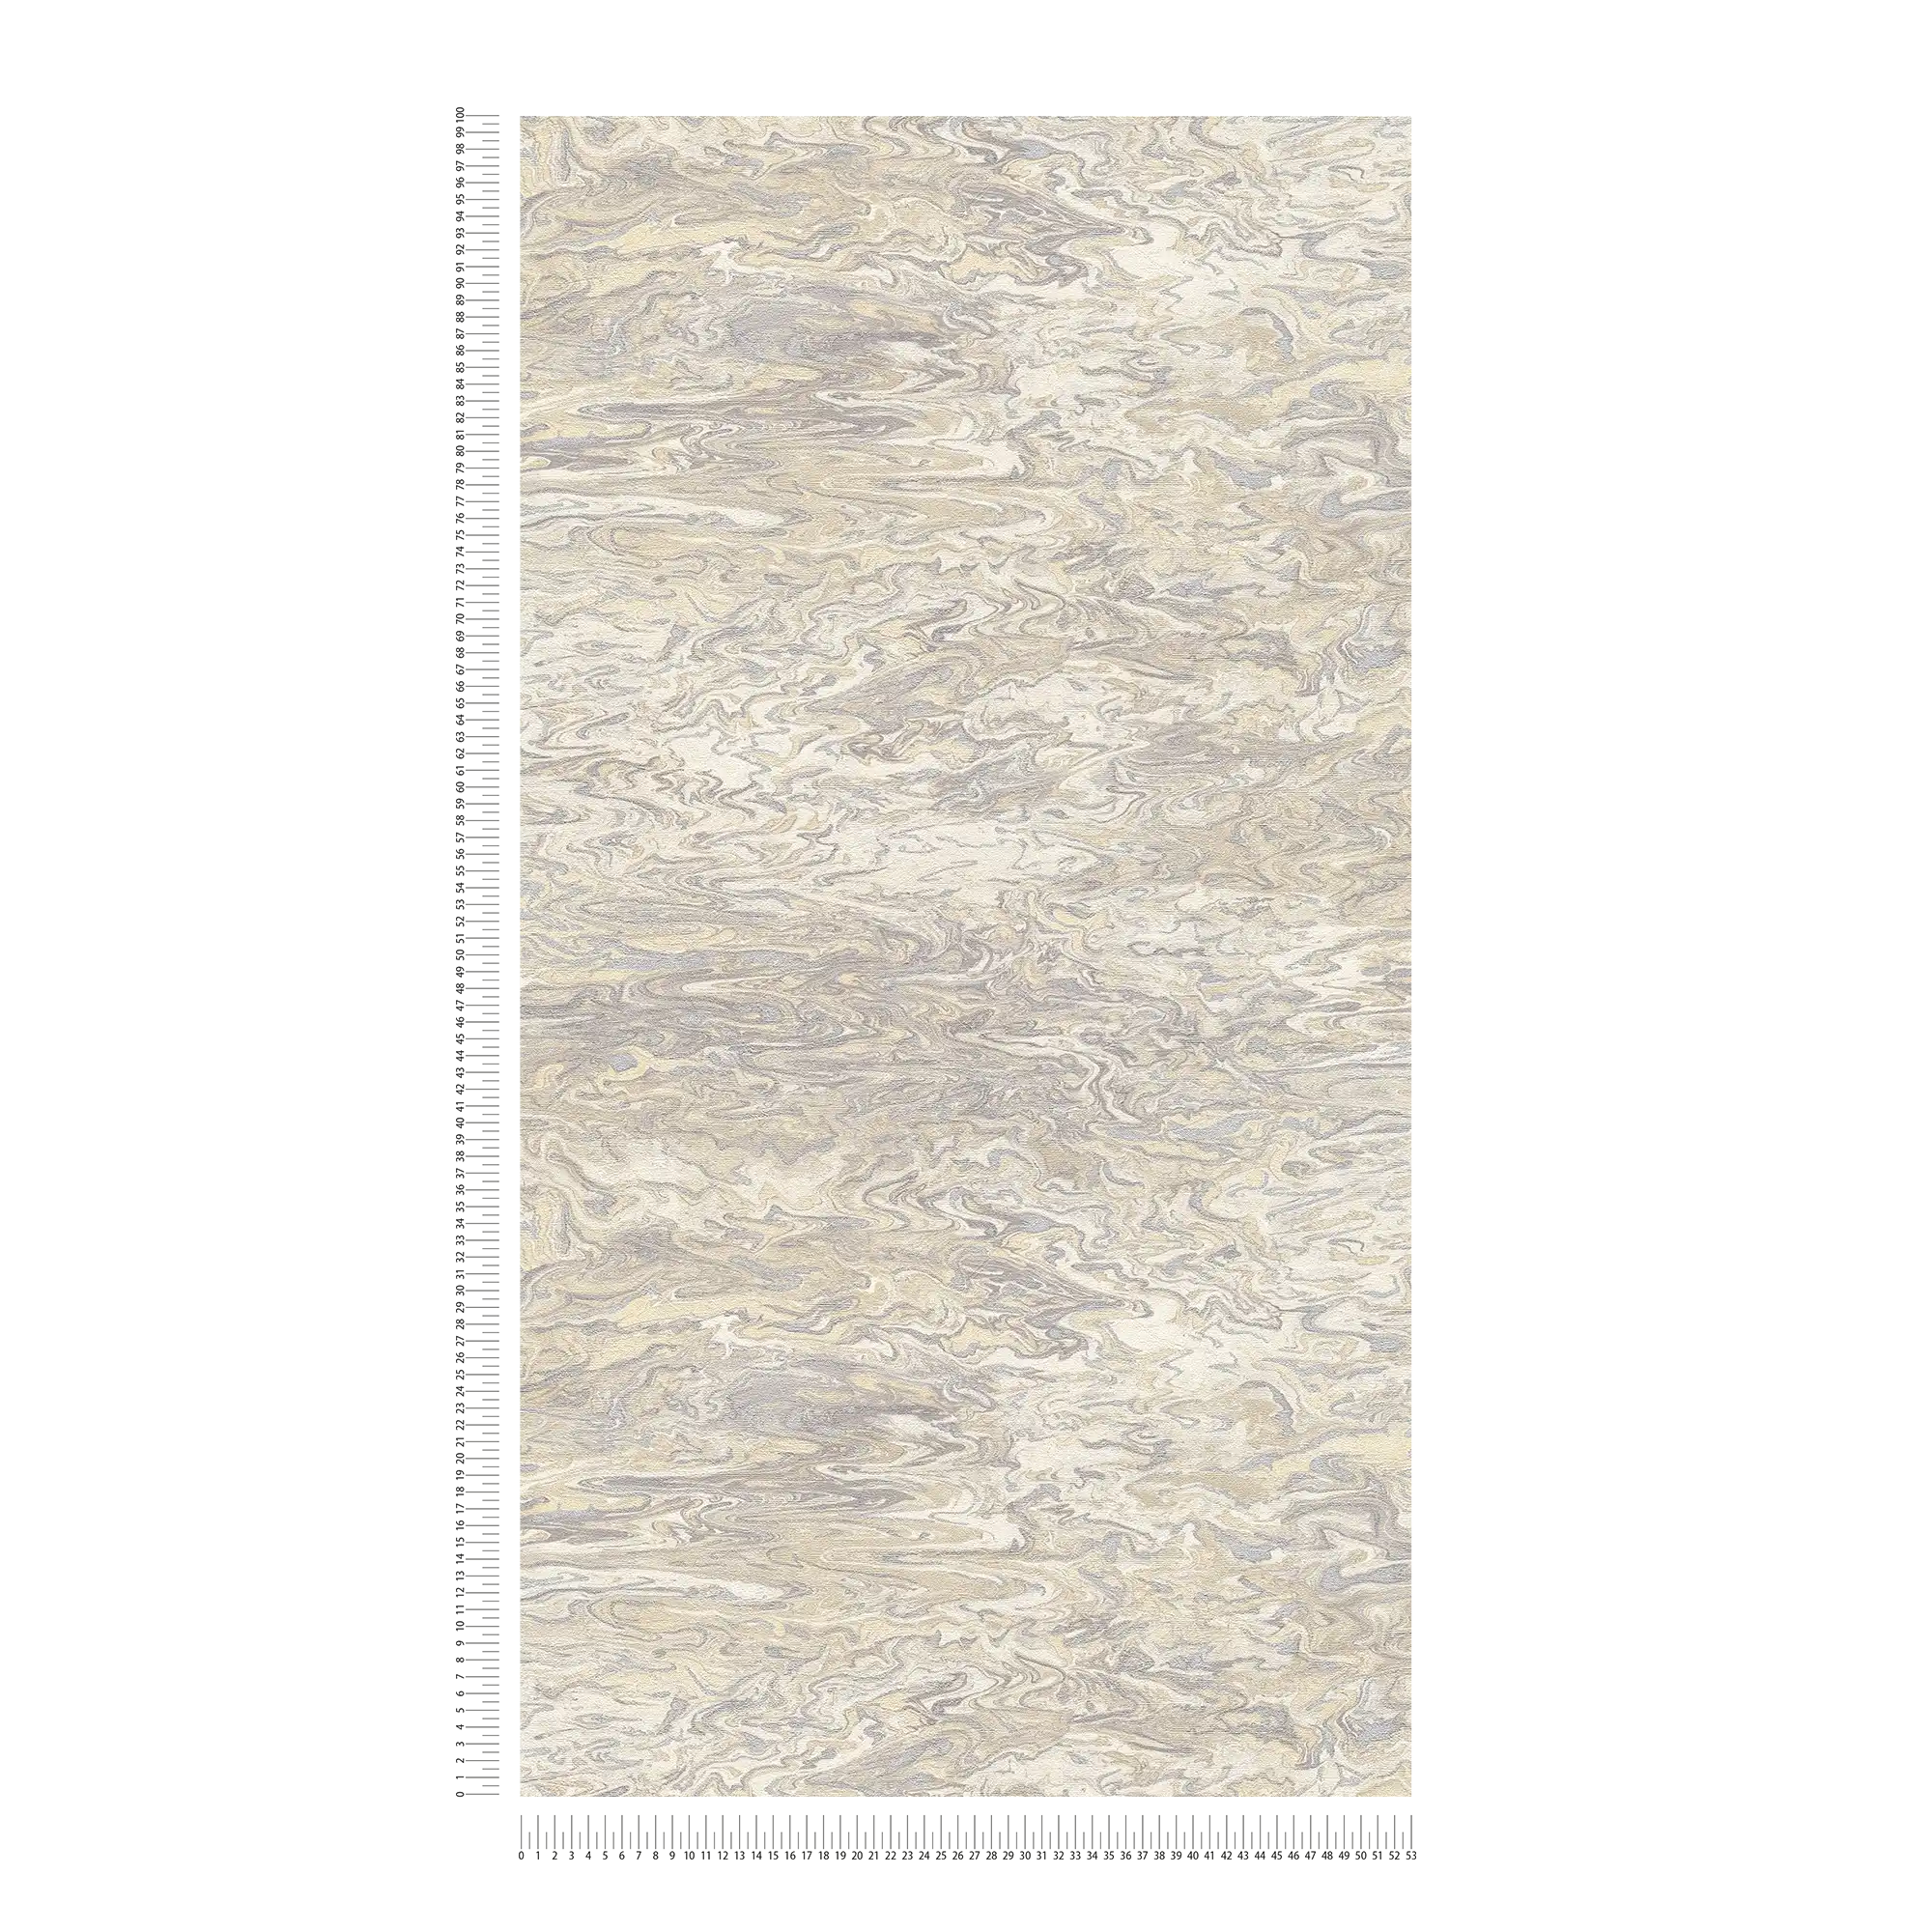             Gemarmerd behang Marmerpapier effect - wit, beige, crème
        